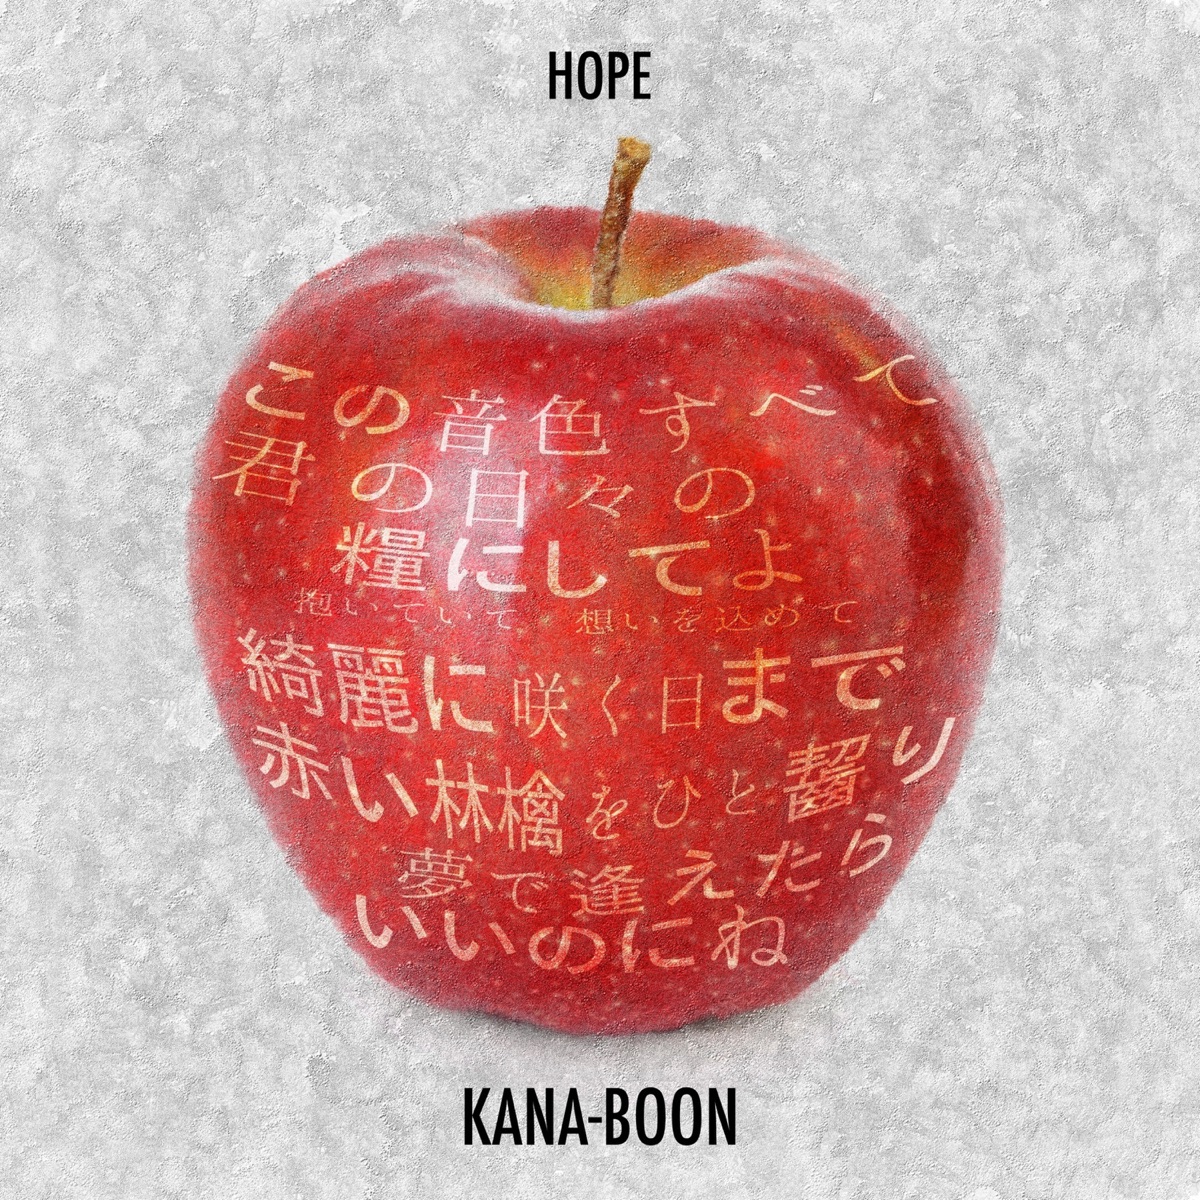 『KANA-BOON - HOPE 歌詞』収録の『HOPE』ジャケット